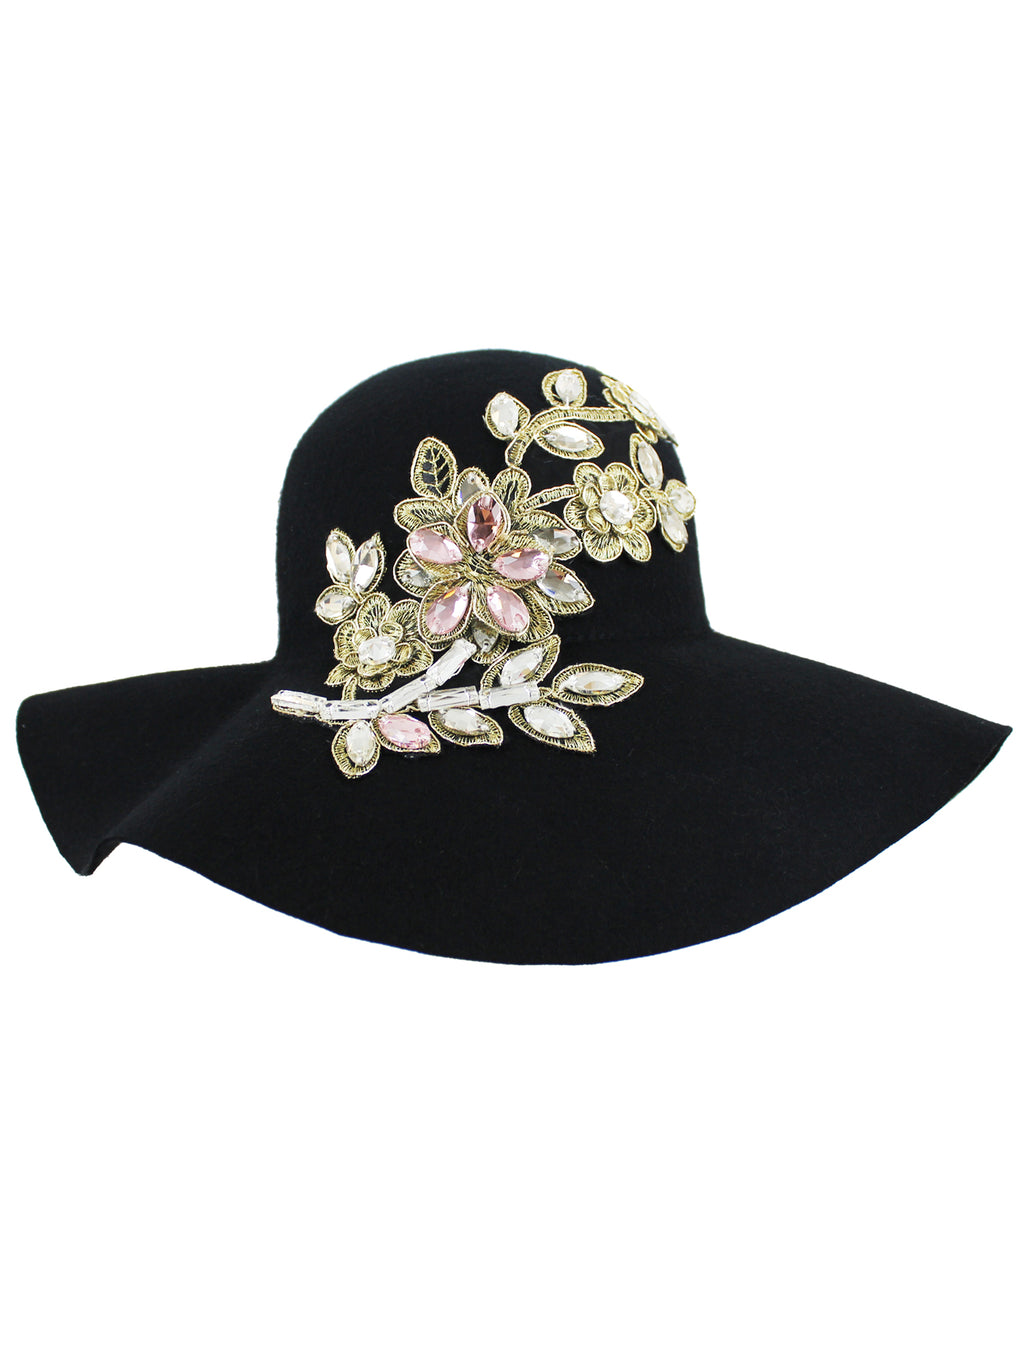 Black Wool Floppy Hat With Rhinestone Flower